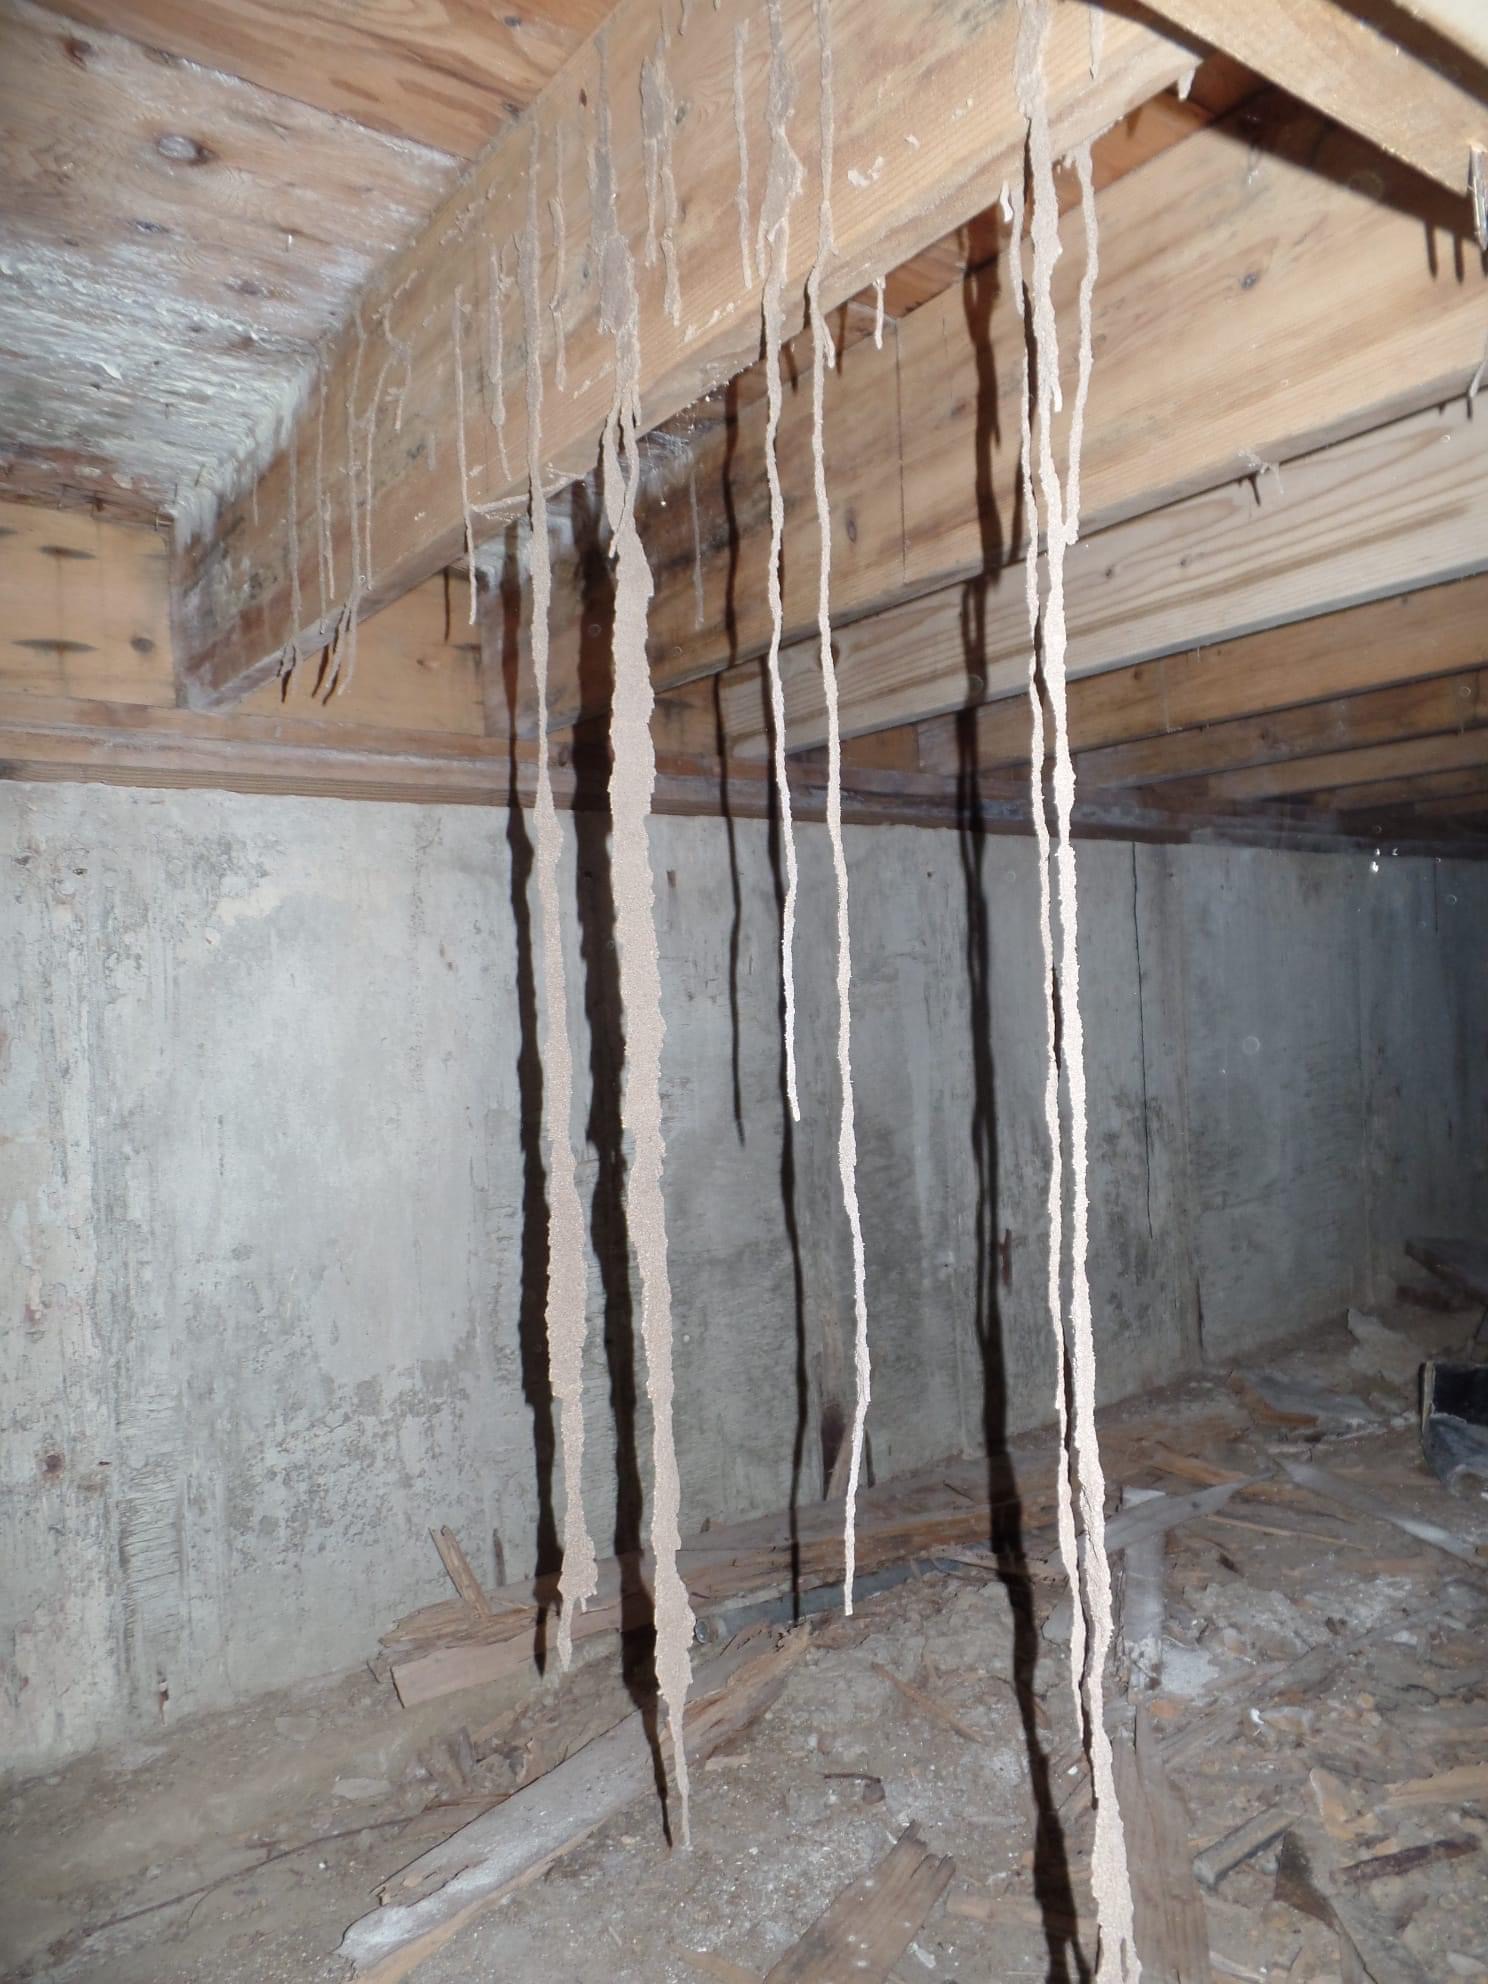 Subterranean termite mud tubes